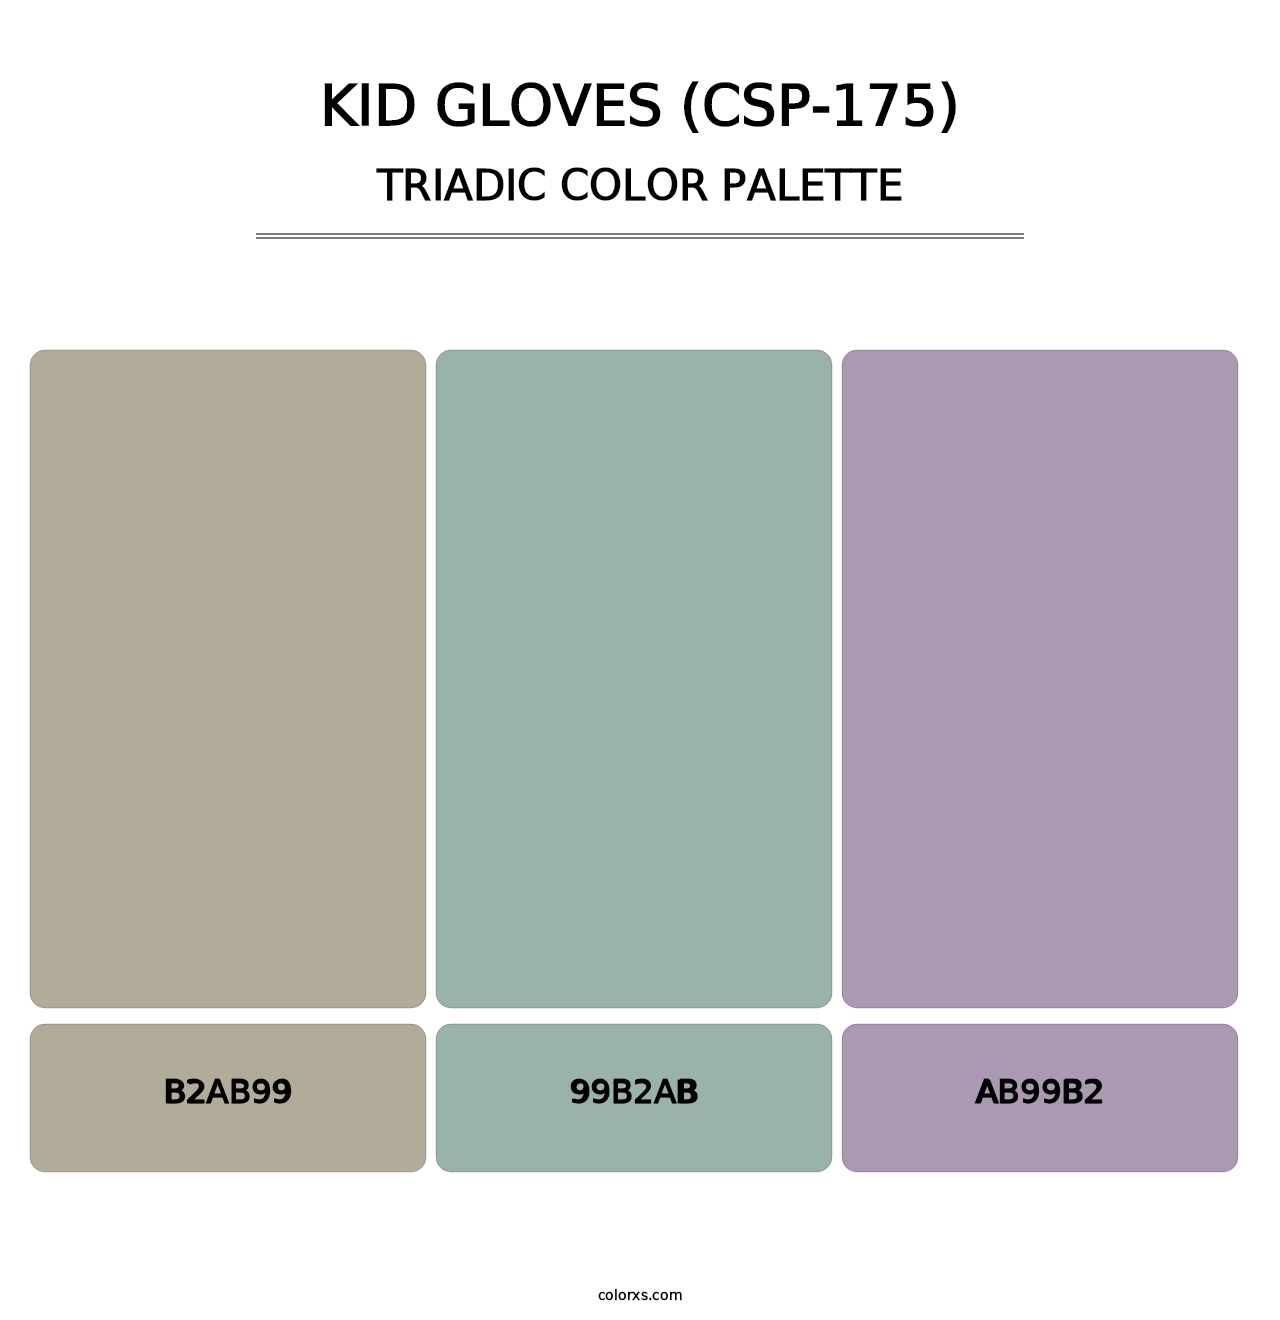 Kid Gloves (CSP-175) - Triadic Color Palette